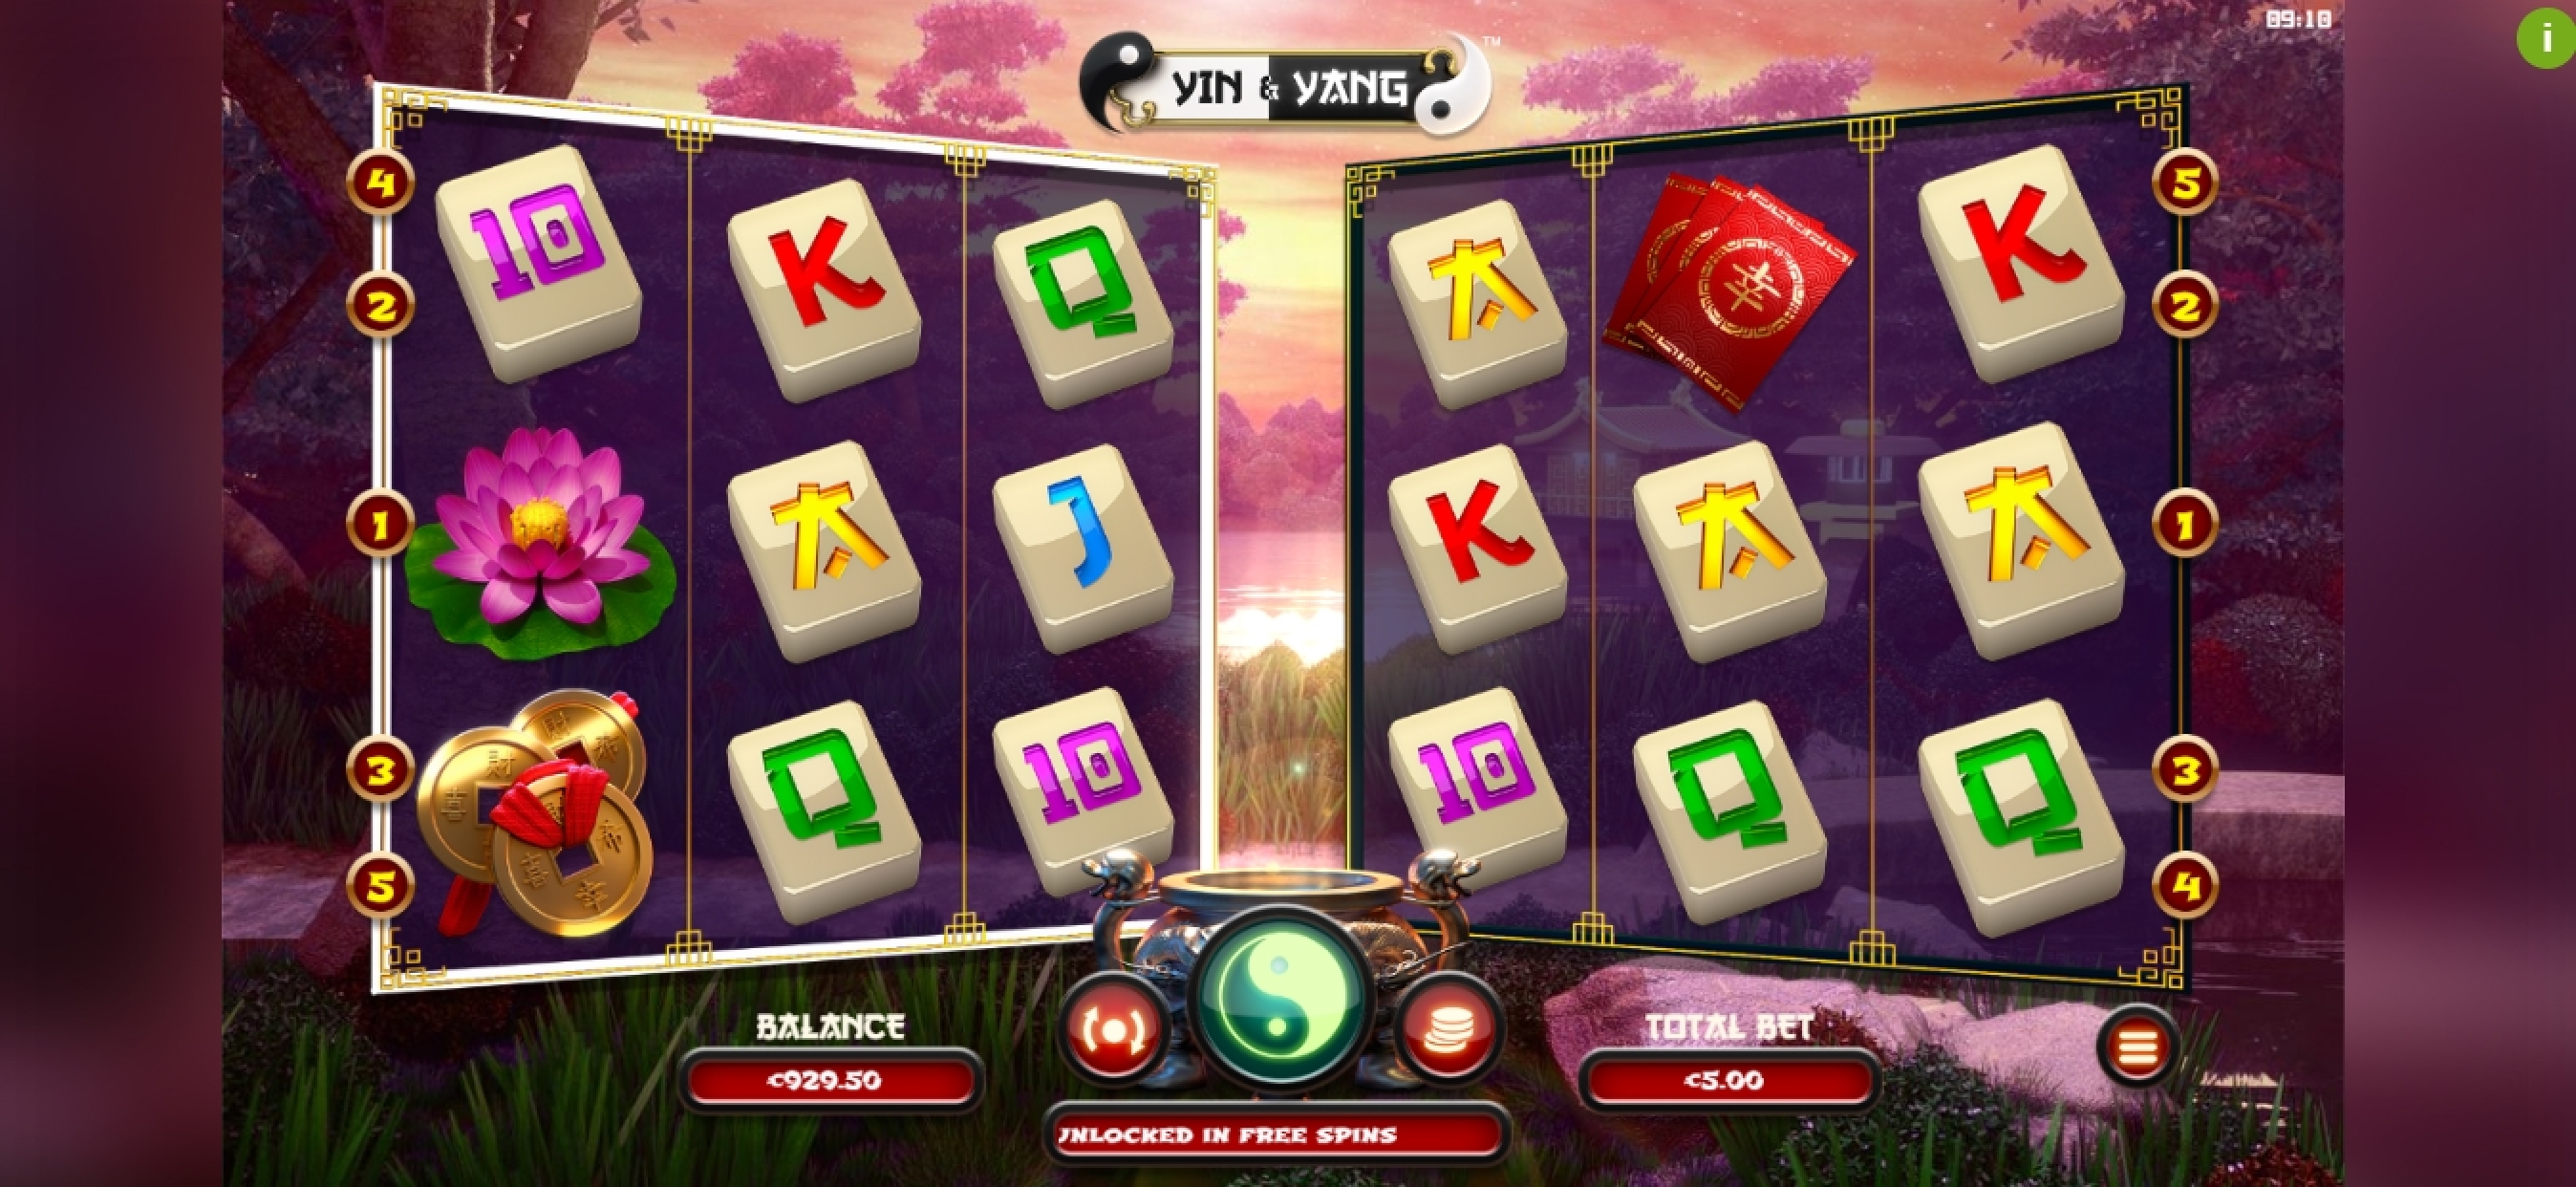 Reels in Yin & Yang Slot Game by BB Games